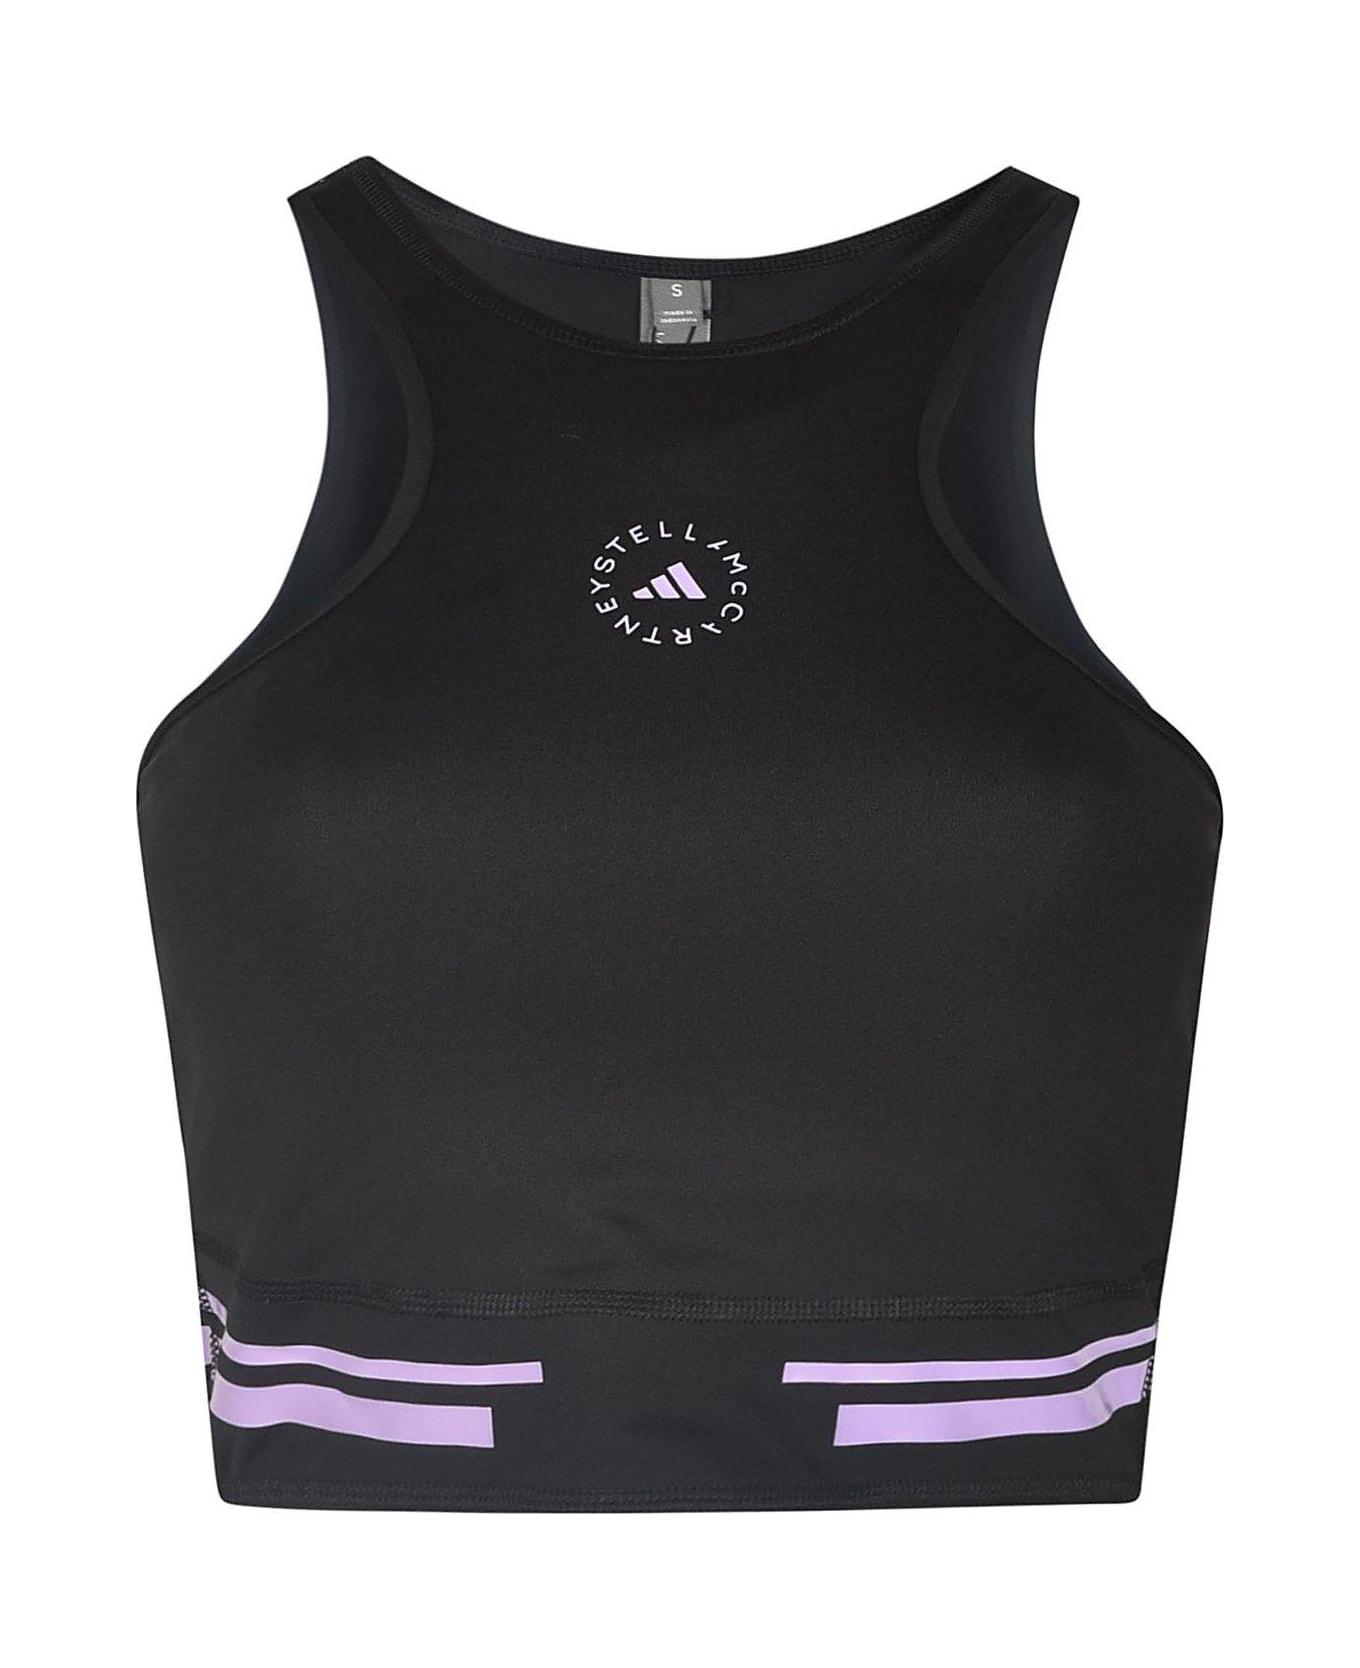 Adidas by Stella McCartney Halterneck Cropped Tank Top - Black Purple